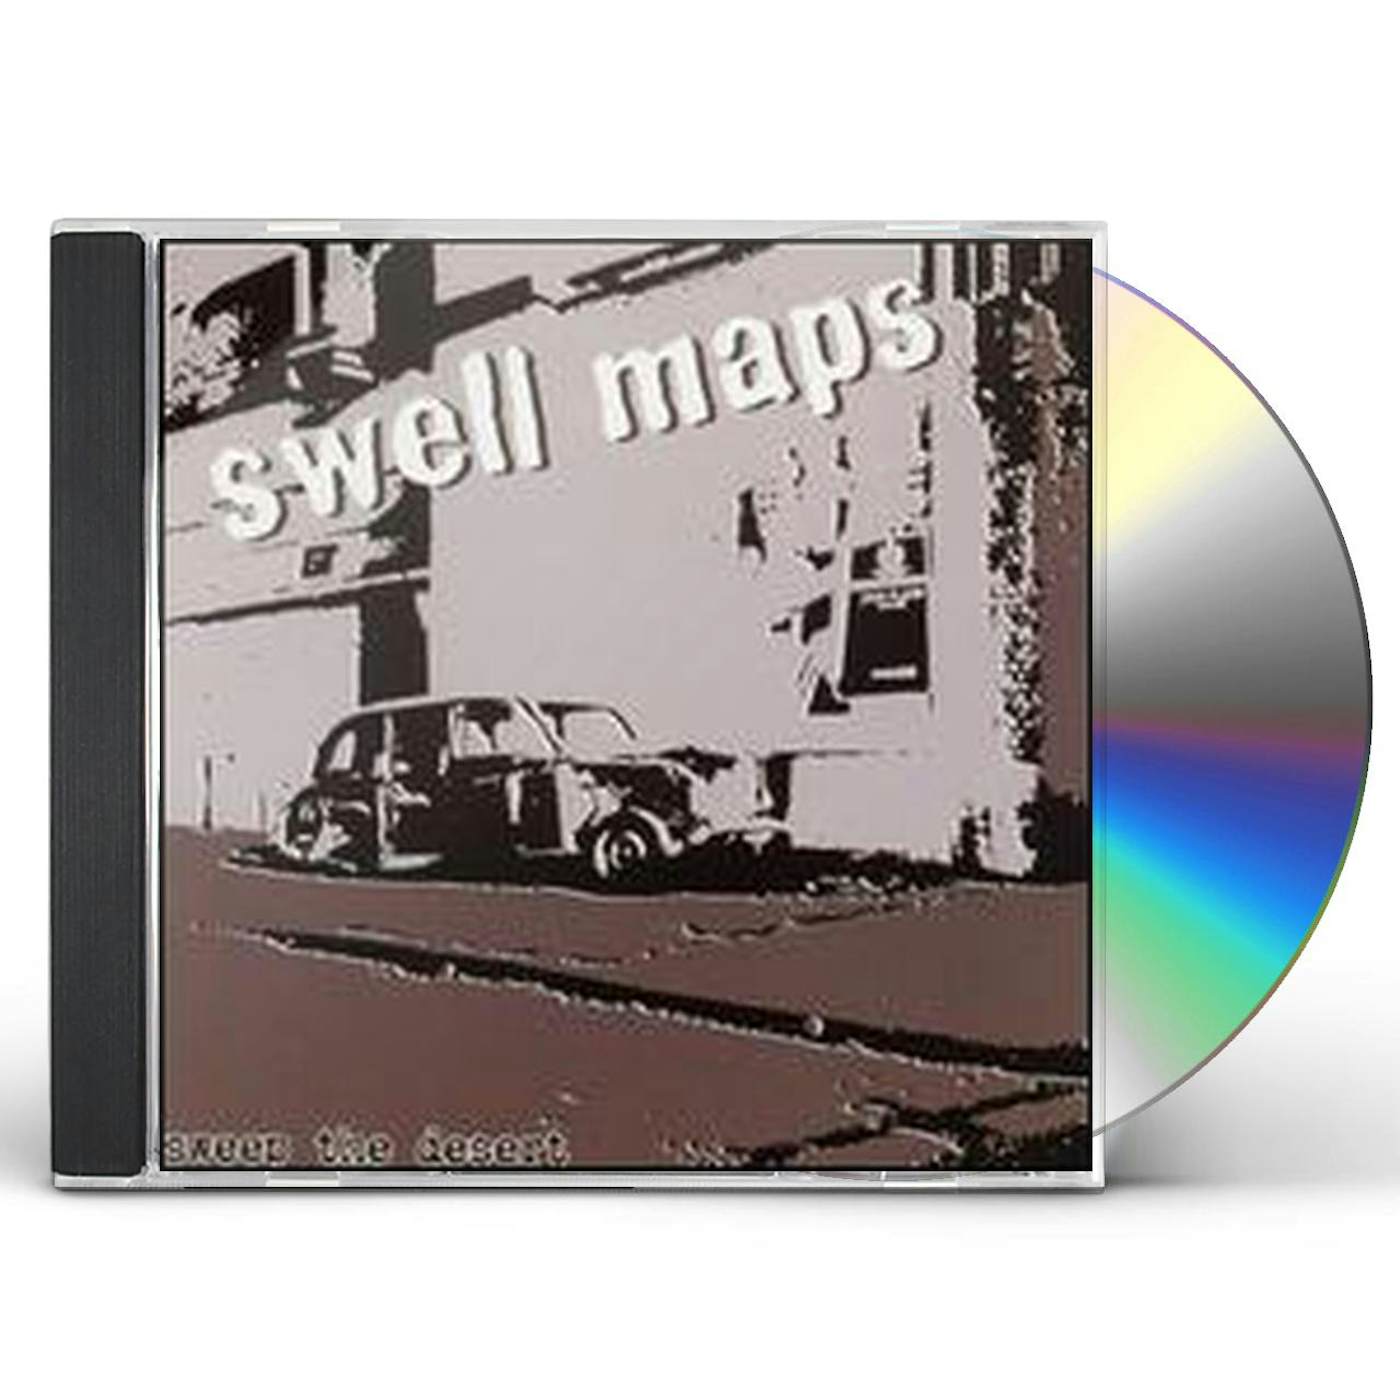 Swell Maps SWEEP THE DESERT CD